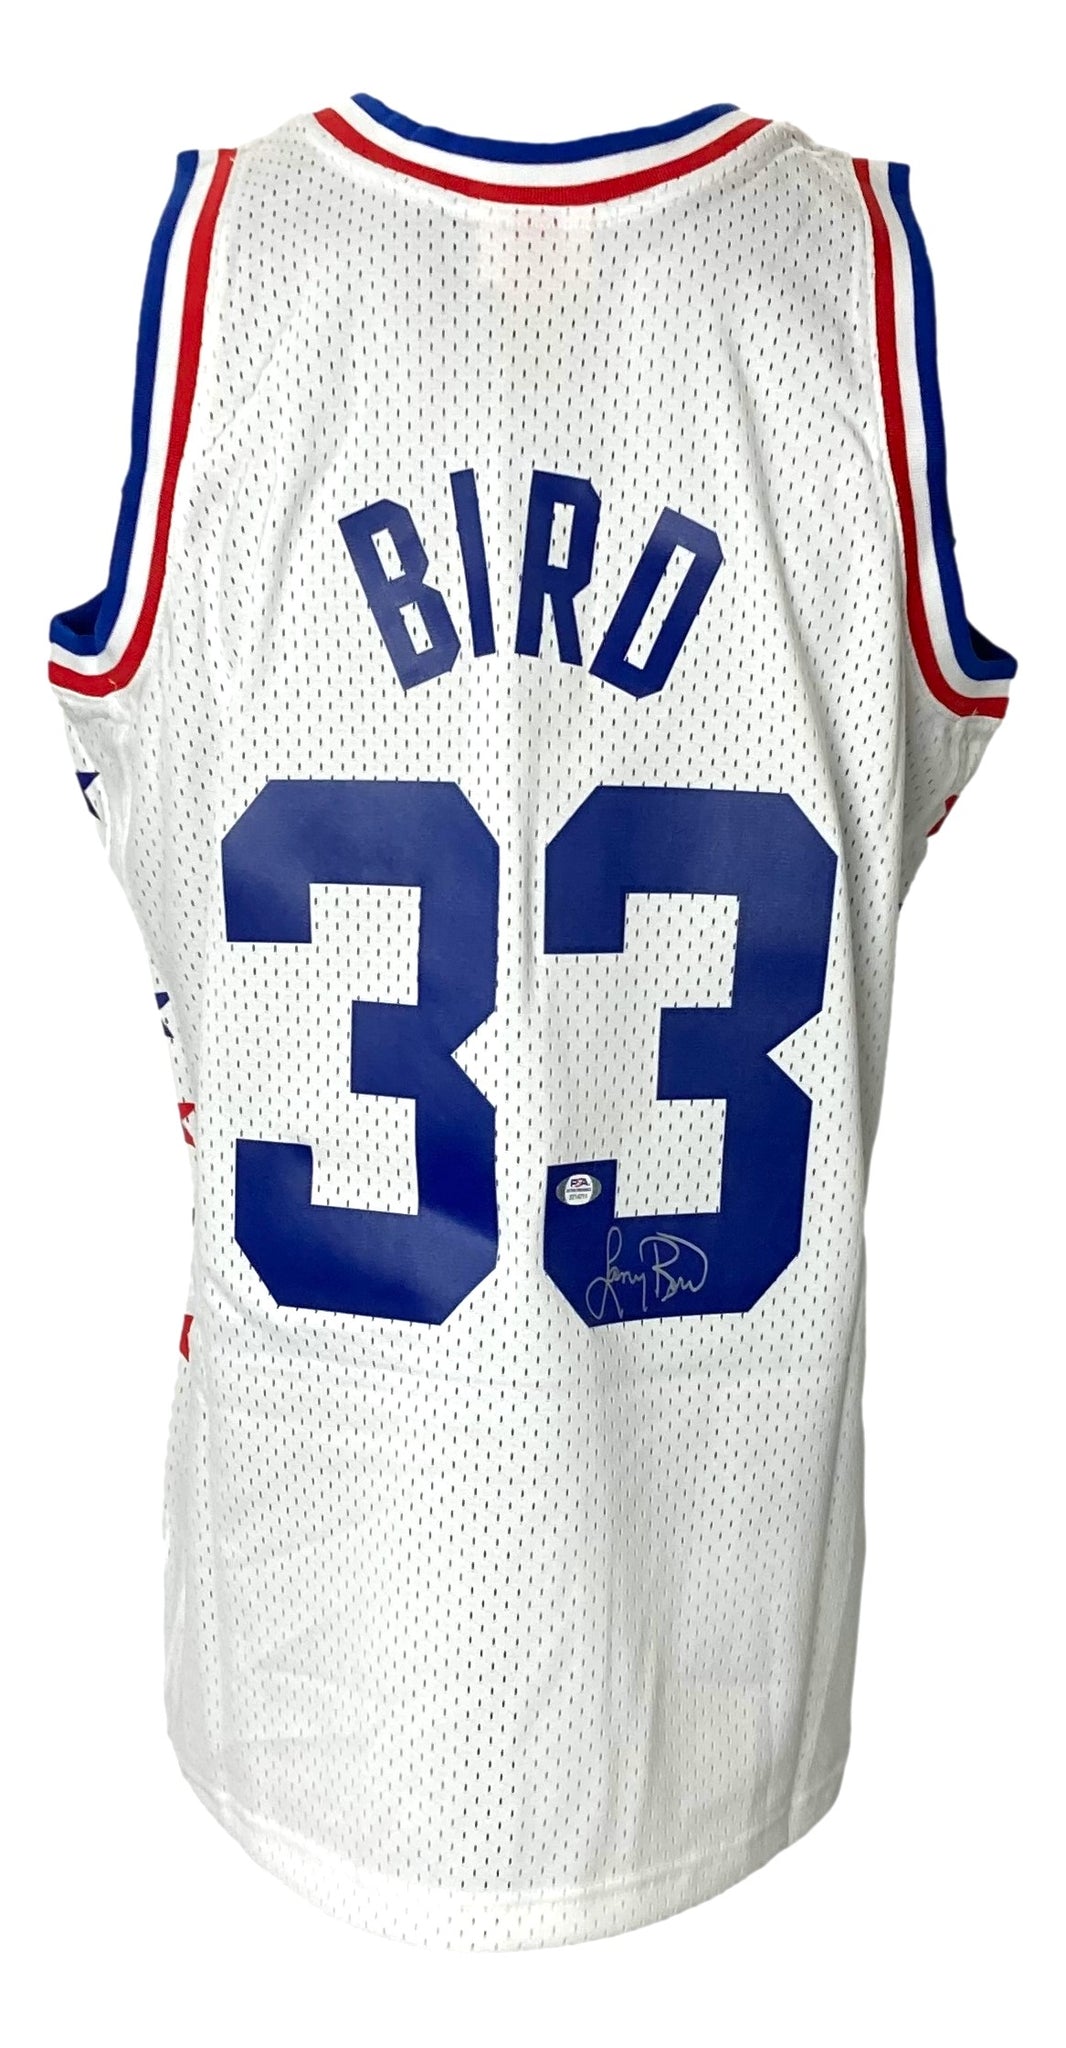 Larry Bird Autographed Boston Celtics Mitchell and Ness Basketball Jersey XL - PSA